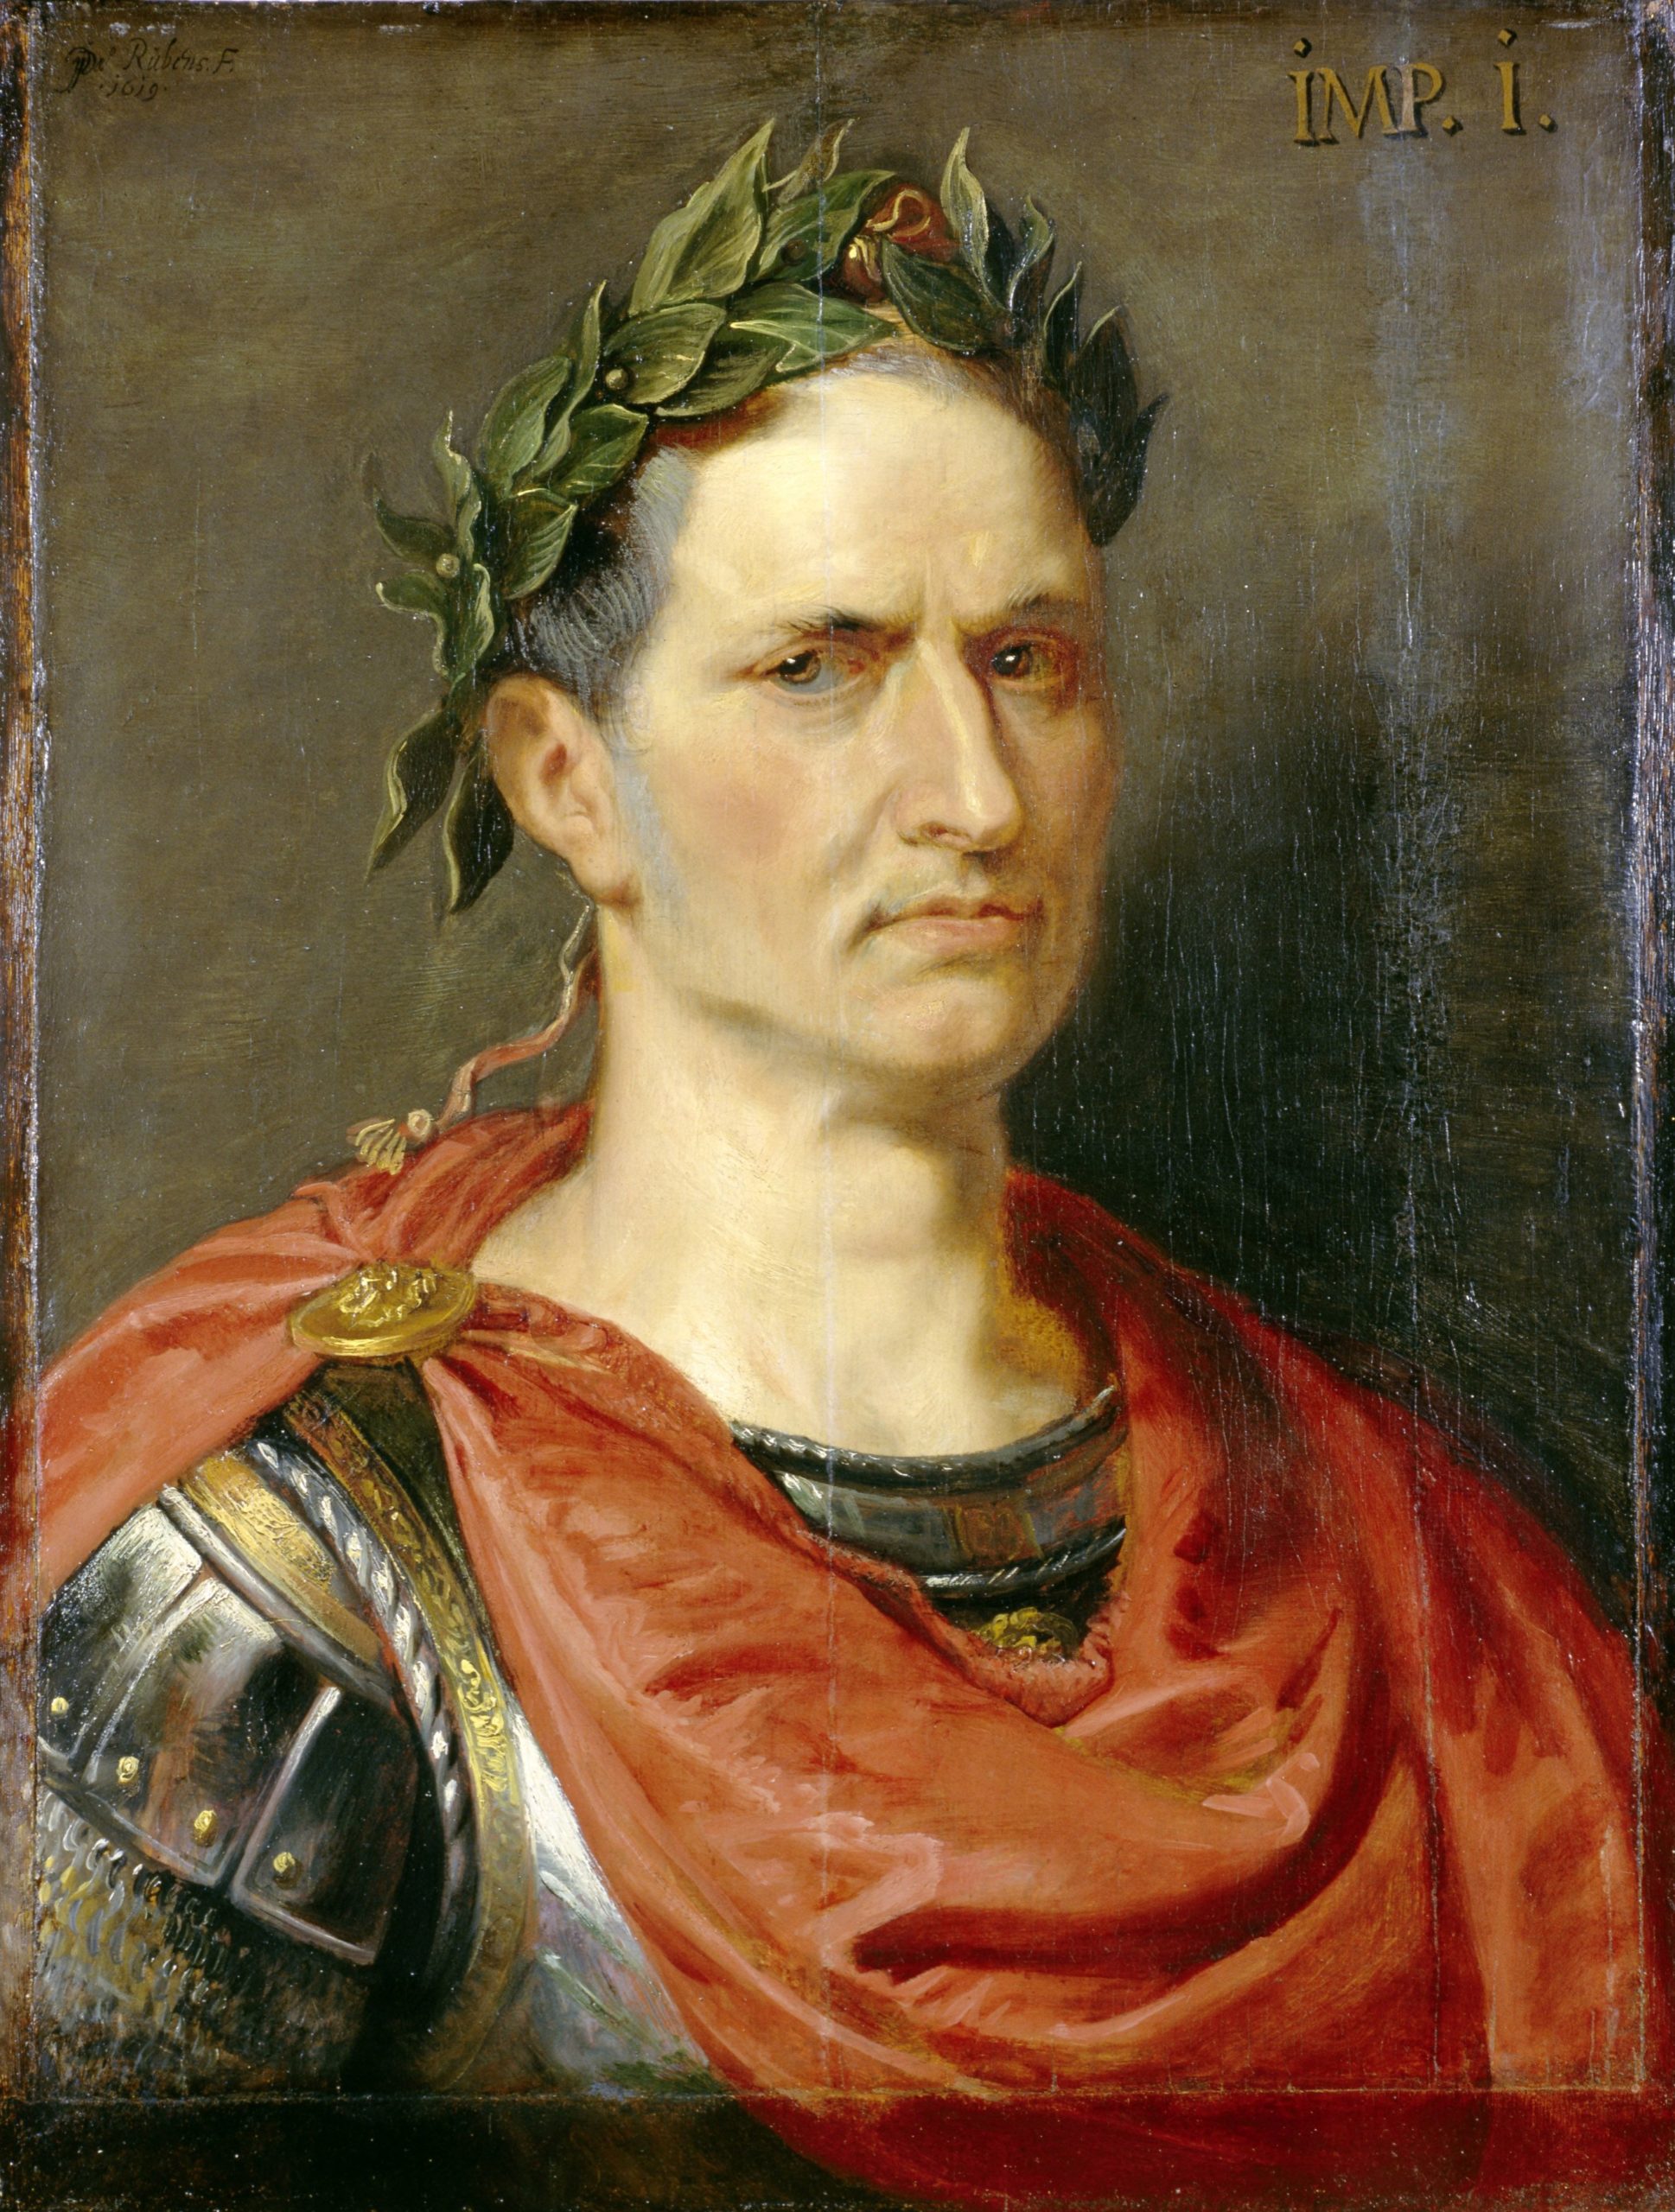 15 Most Influential People in History - Julius Caesar